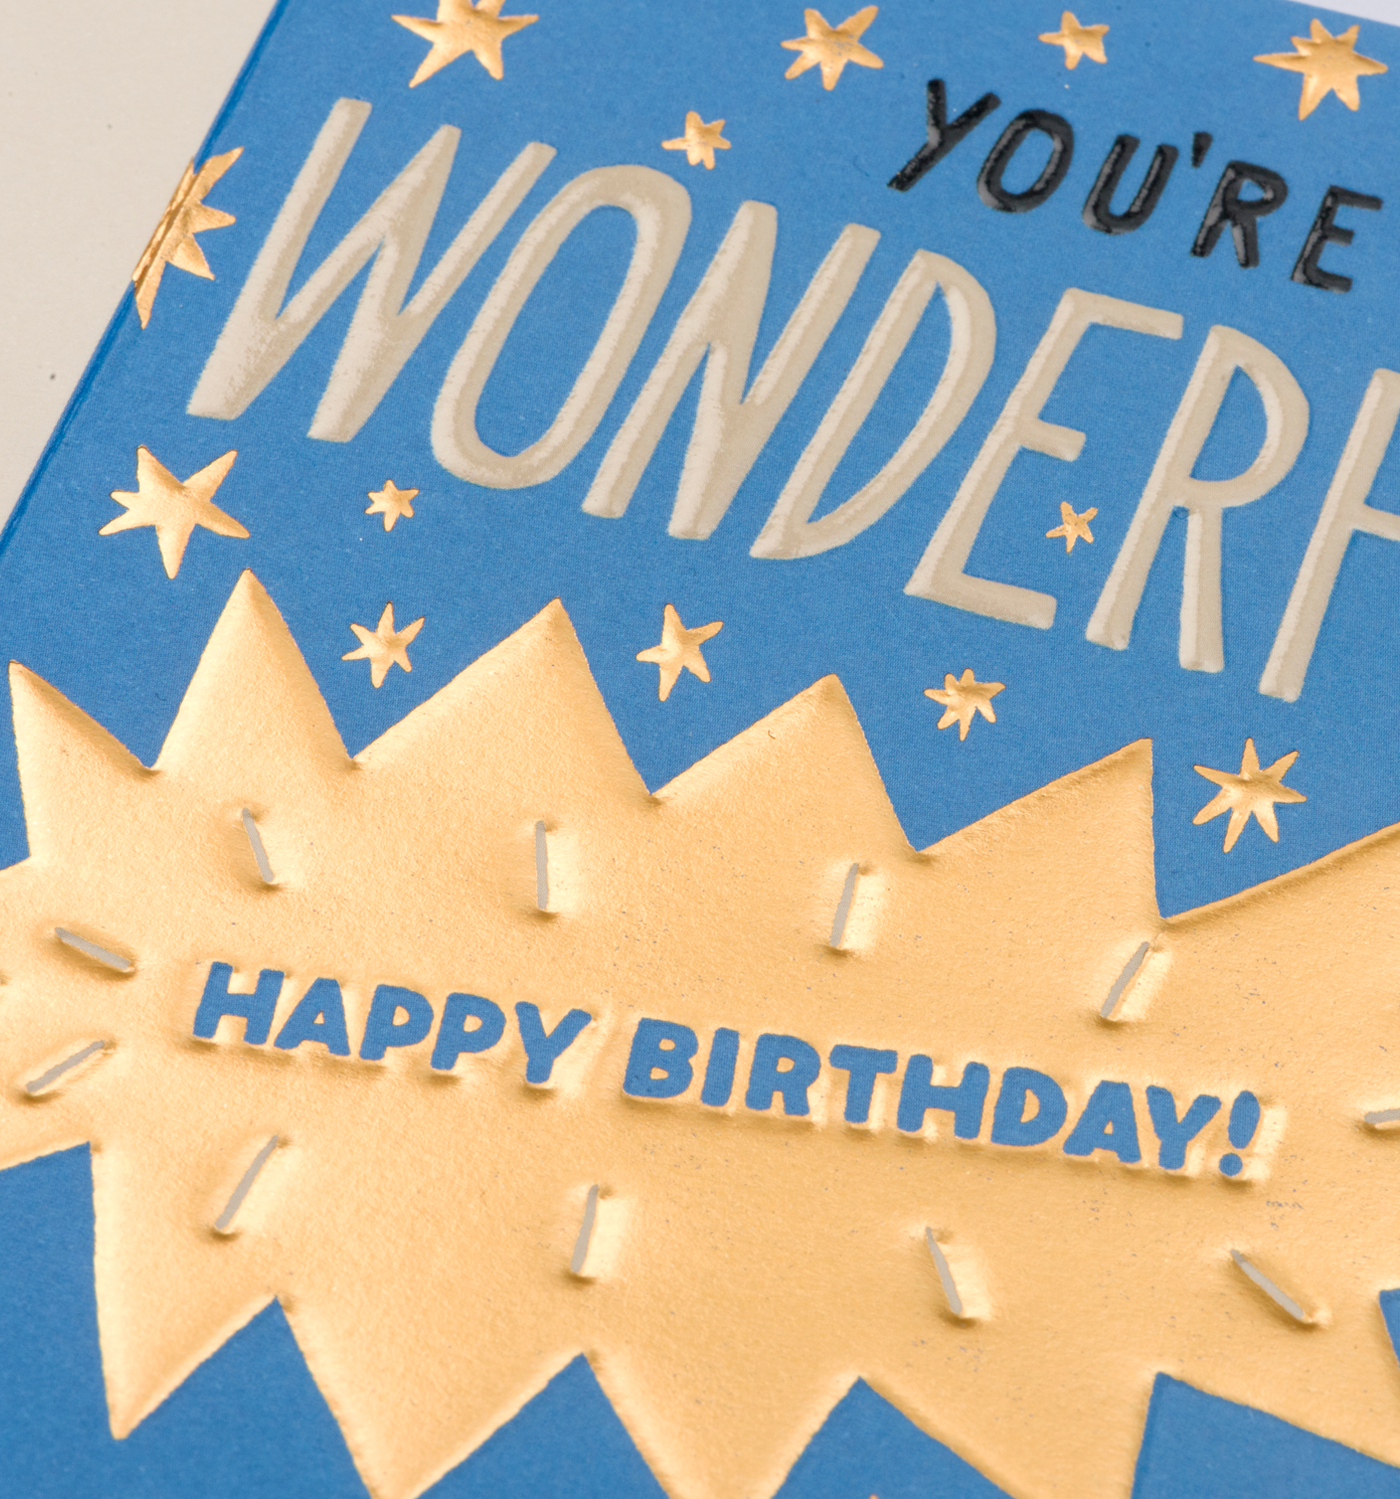 You're Wonderful Birthday Greetings Card